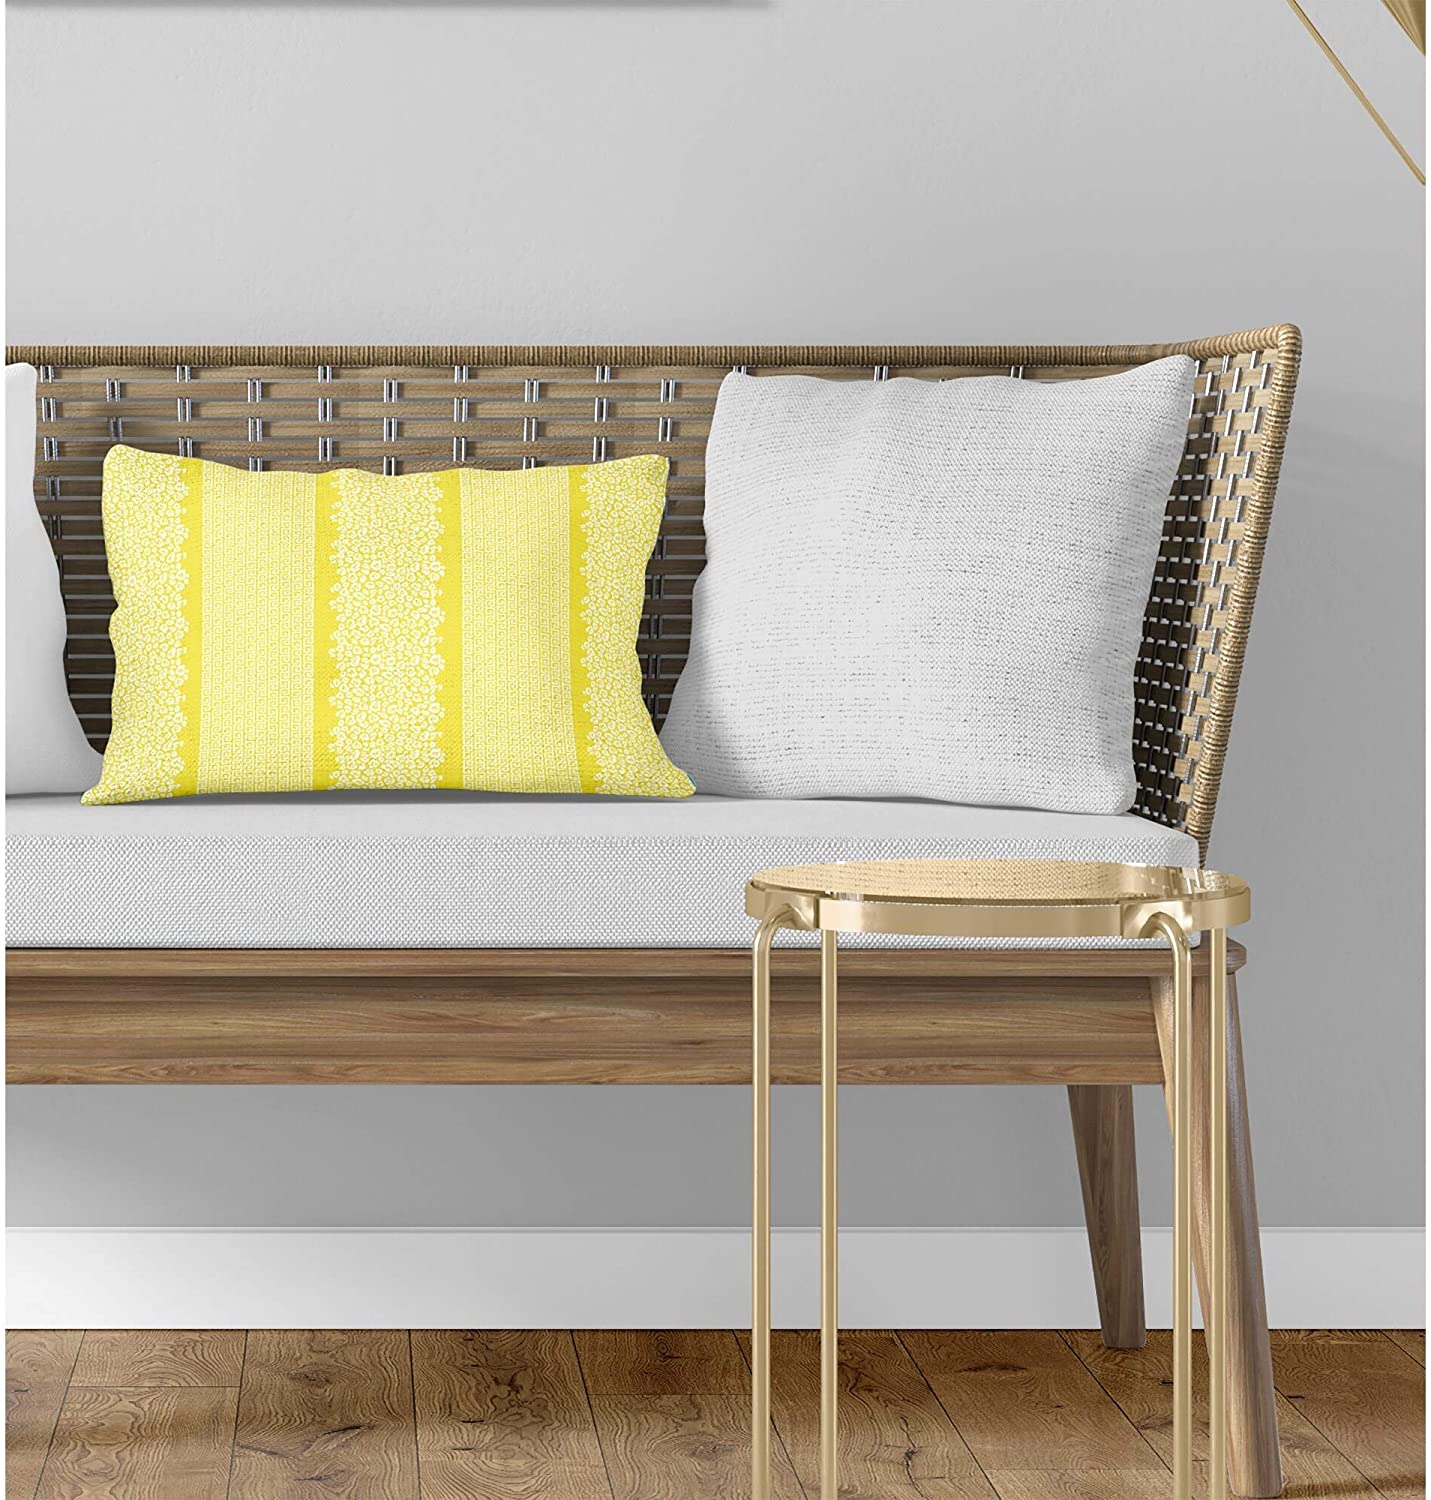 UKN Leopard Key Lemon White Lumbar Pillow Yellow Animal Modern Contemporary Polyester Single Removable Cover